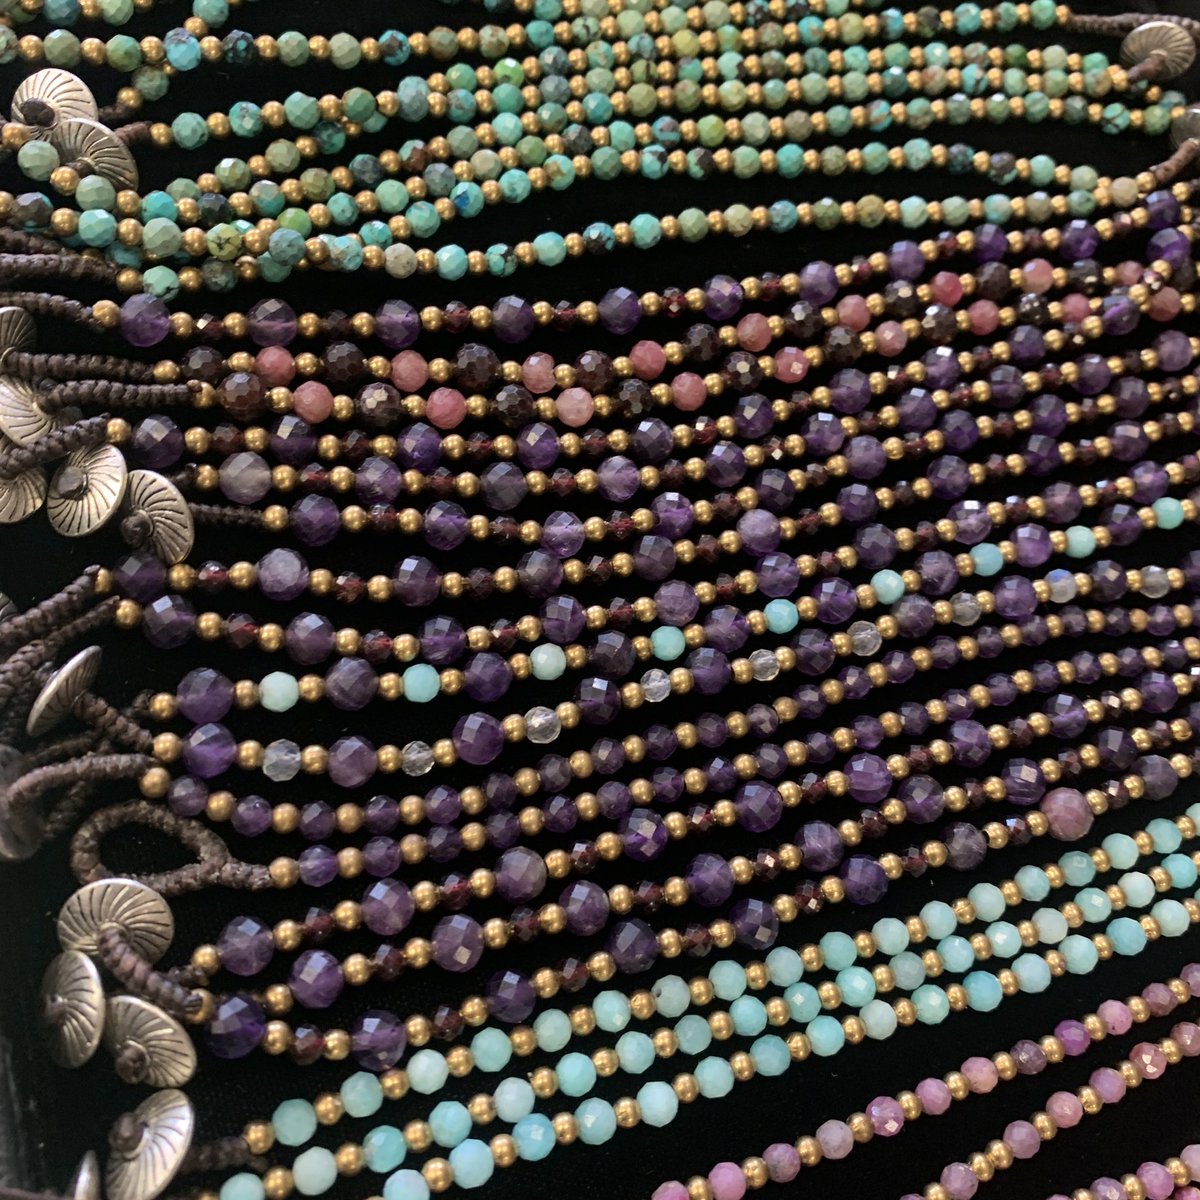 4mm Gemstone Bracelets from Thailand at ObjetsD’Art in Corpus Christi #gemstonebracelets